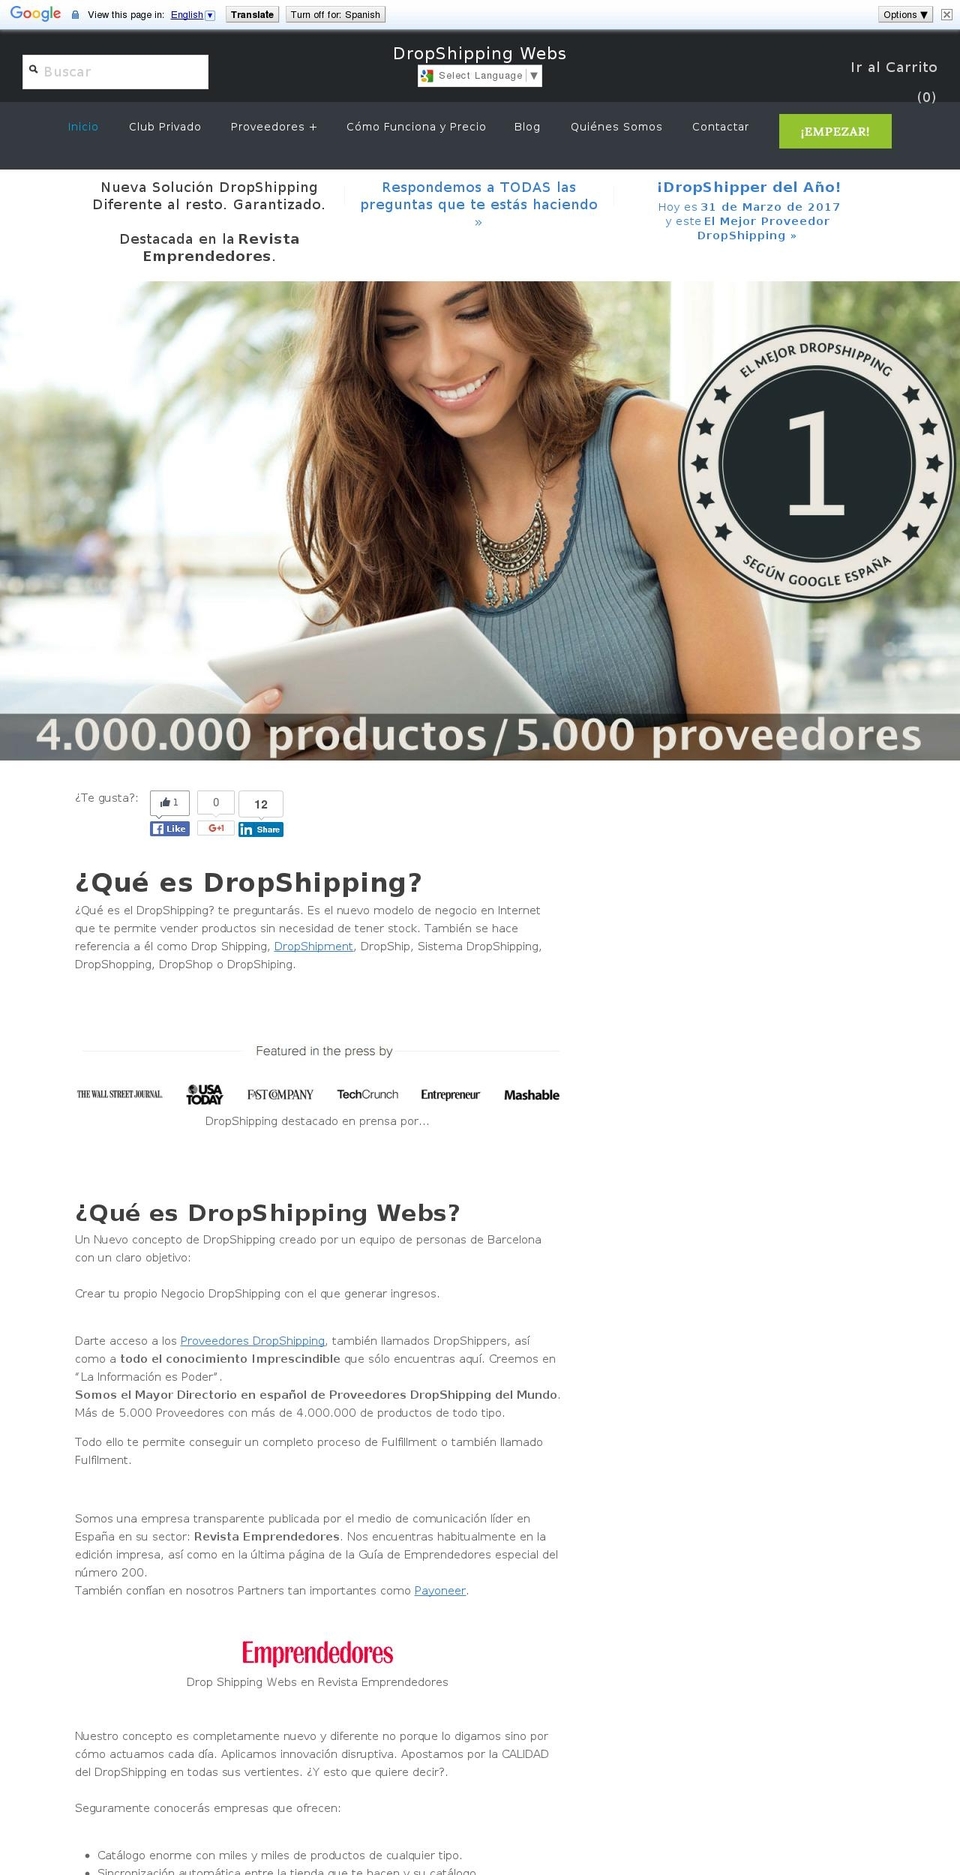 dropshippingwebs.com shopify website screenshot